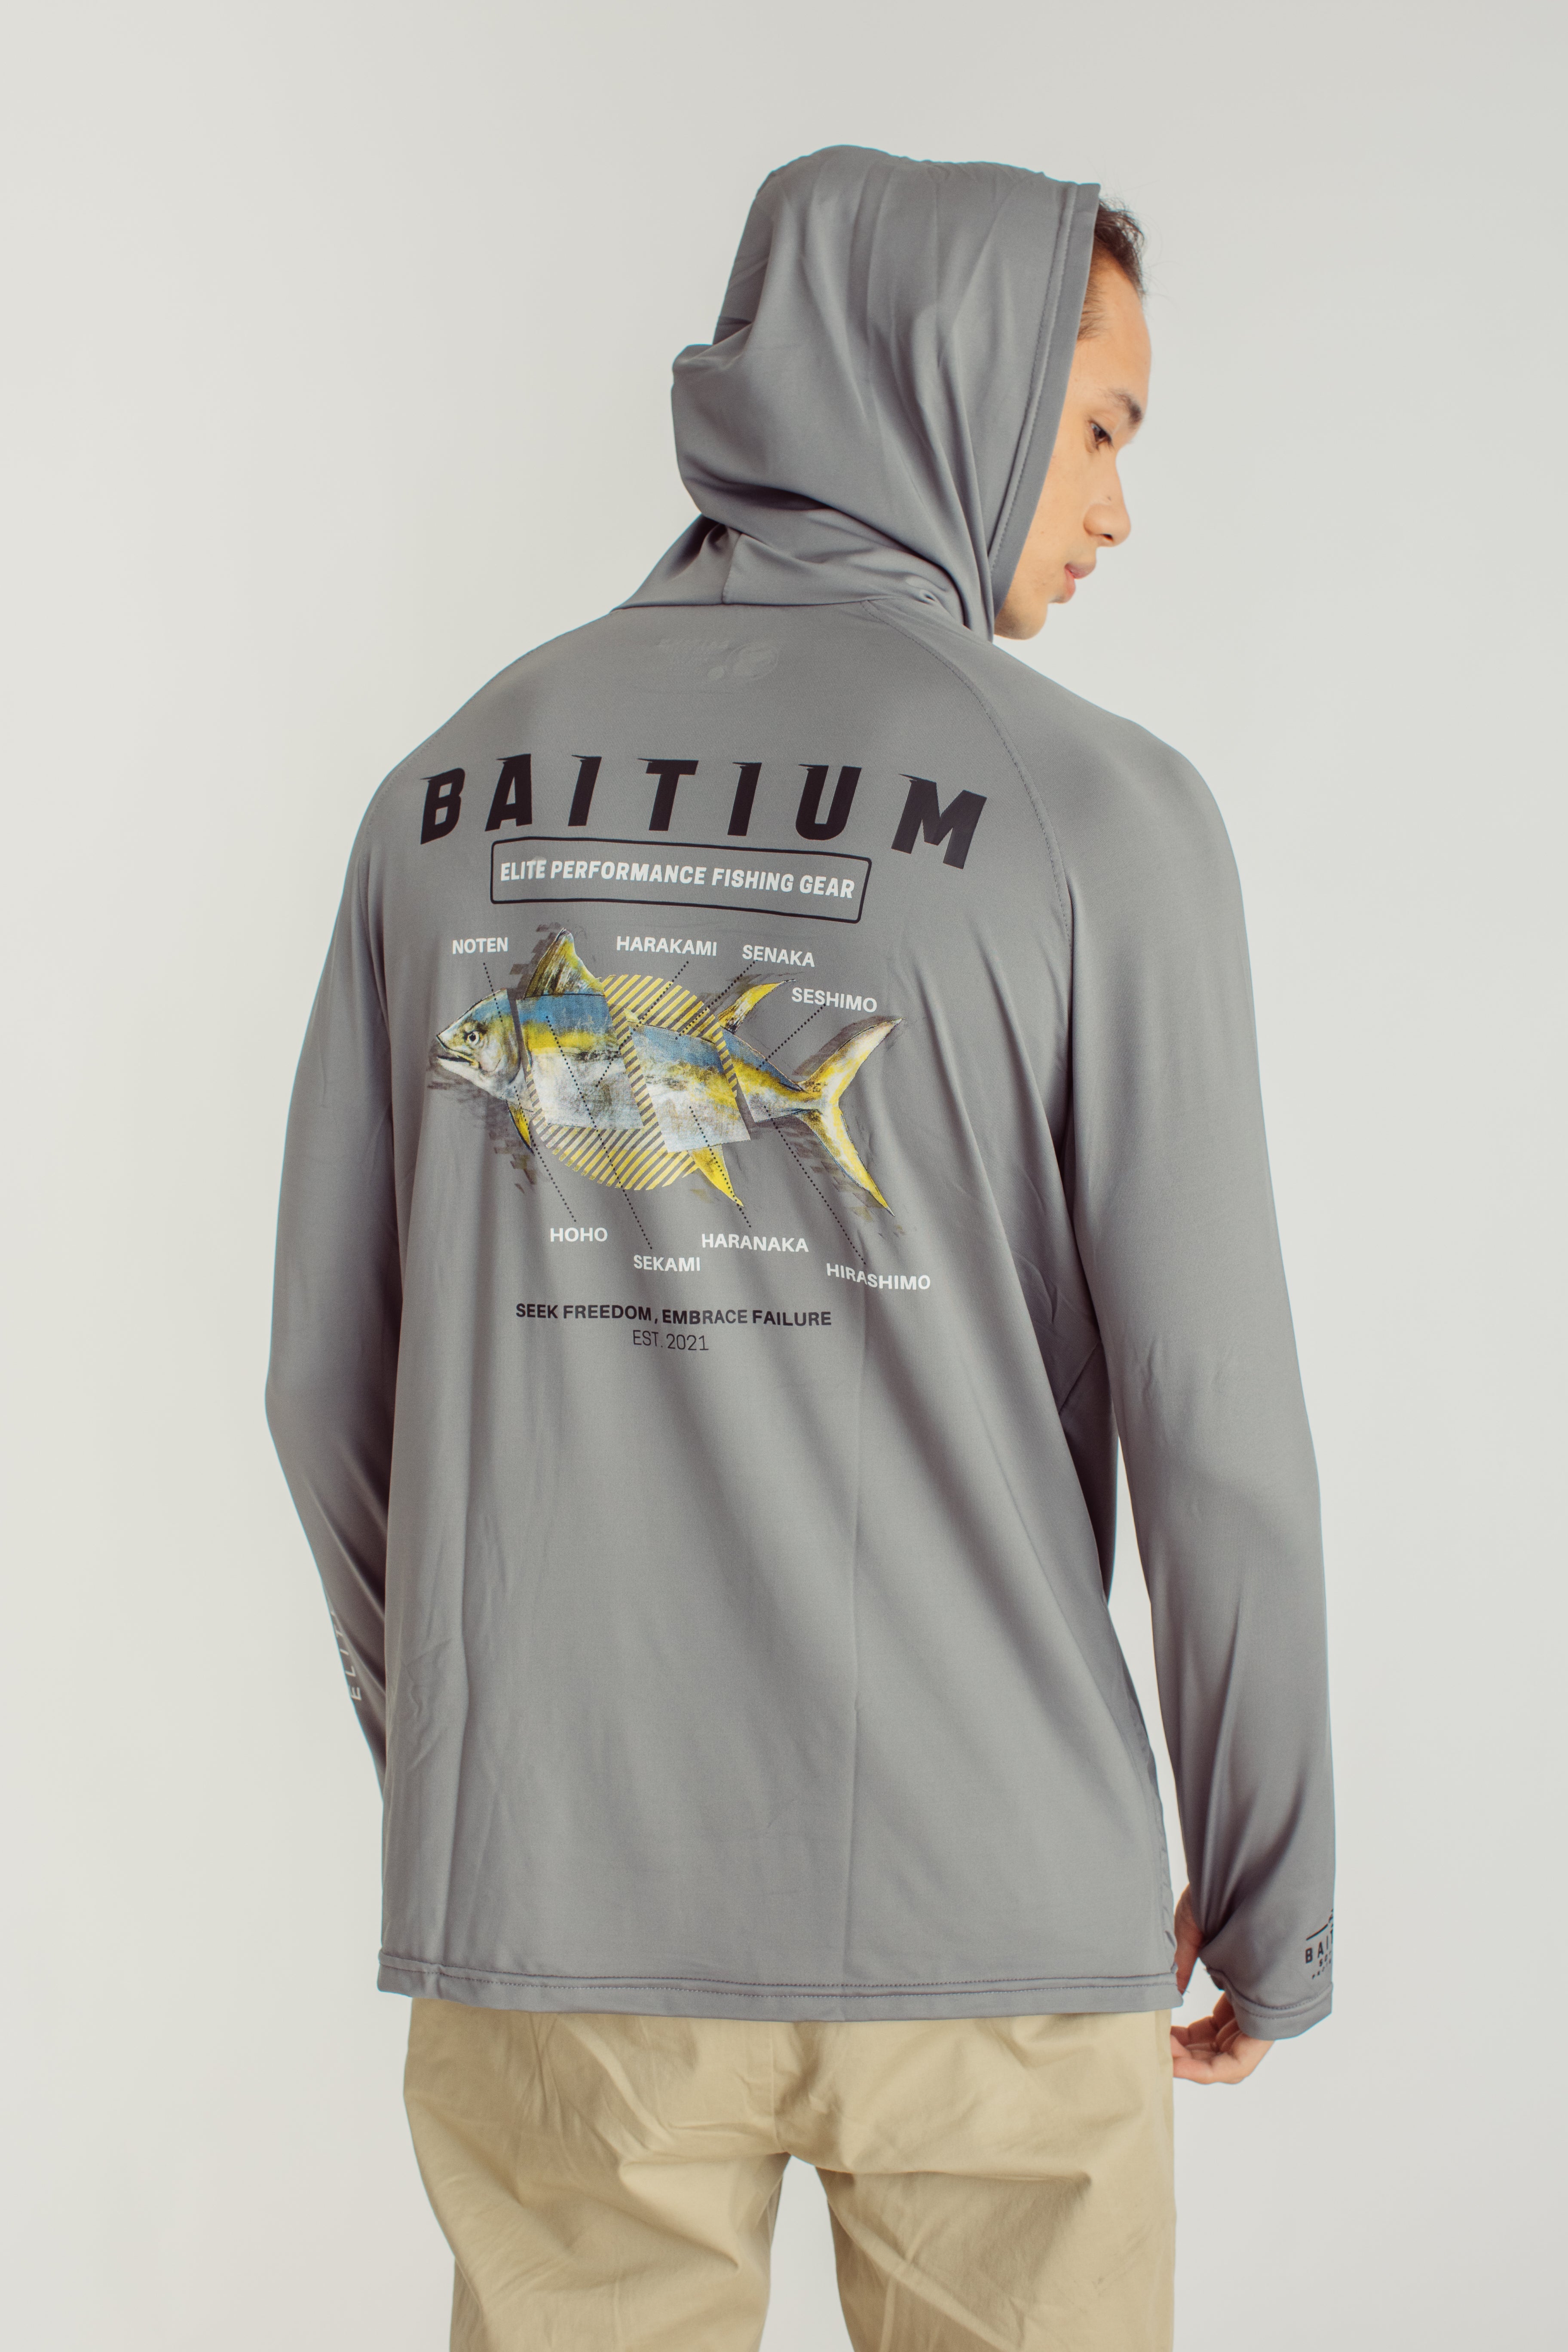 Baitium Fishing Shirt for Men Outdoor Long Sleeve Fishing Shirt Hiking  Running Sun Shirt Rash Guard UPF 50+ 